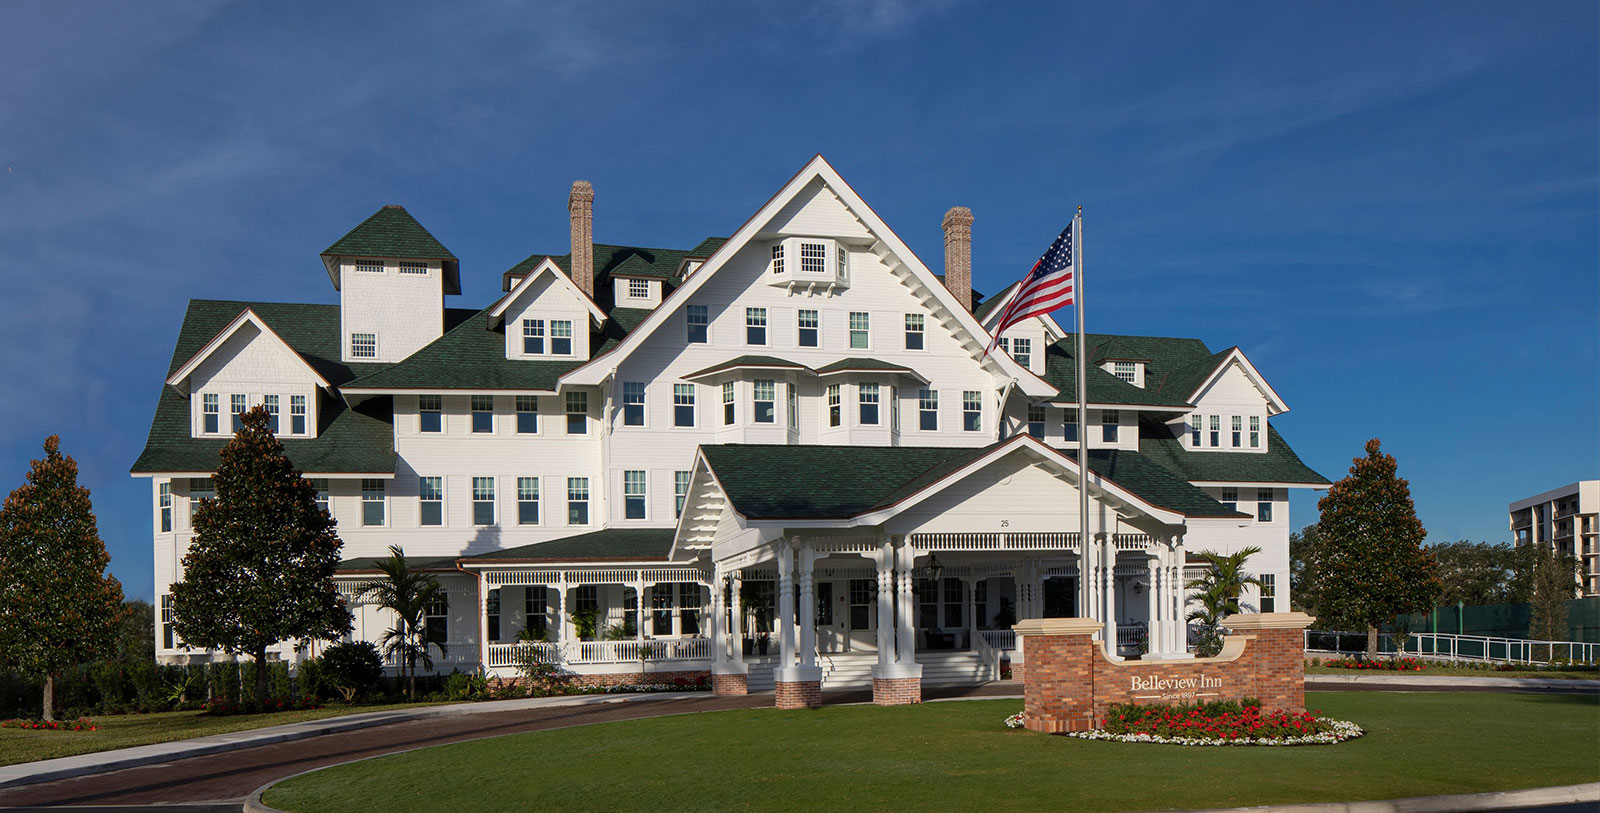 Image of Exterior, Belleview Inn, 1897, Member of Historic Hotels of America, in Belleair, Florida, Overview